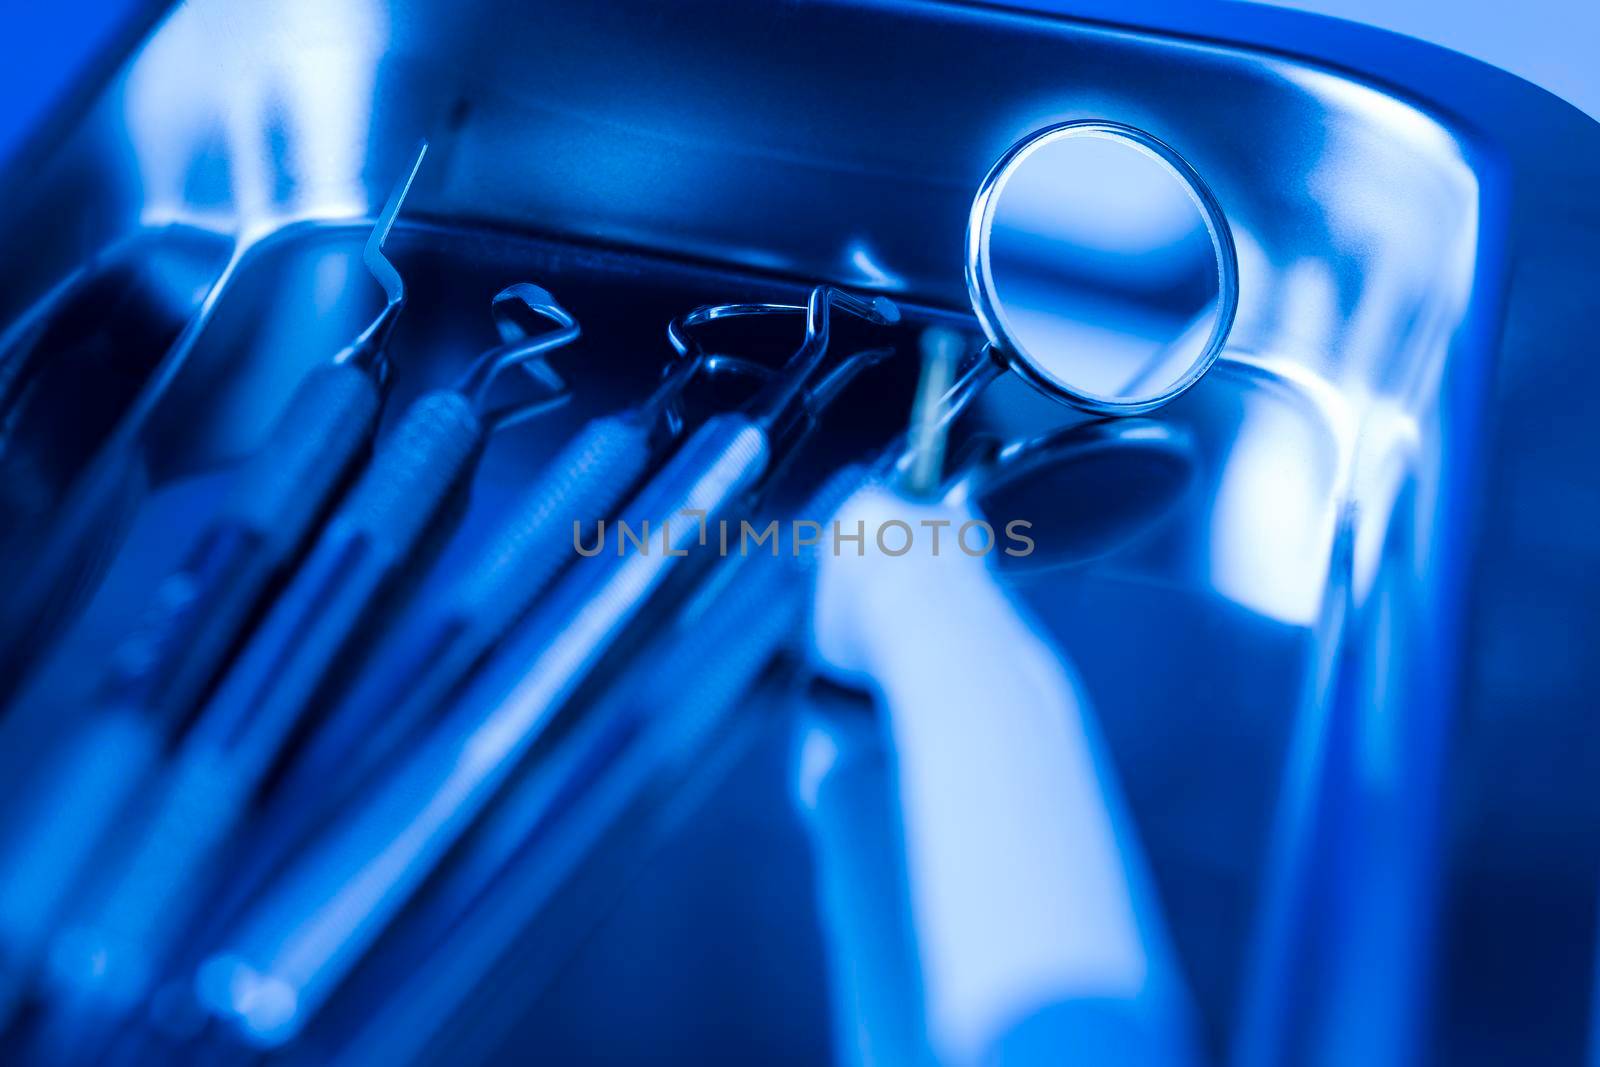 Dentist equipment on blue background